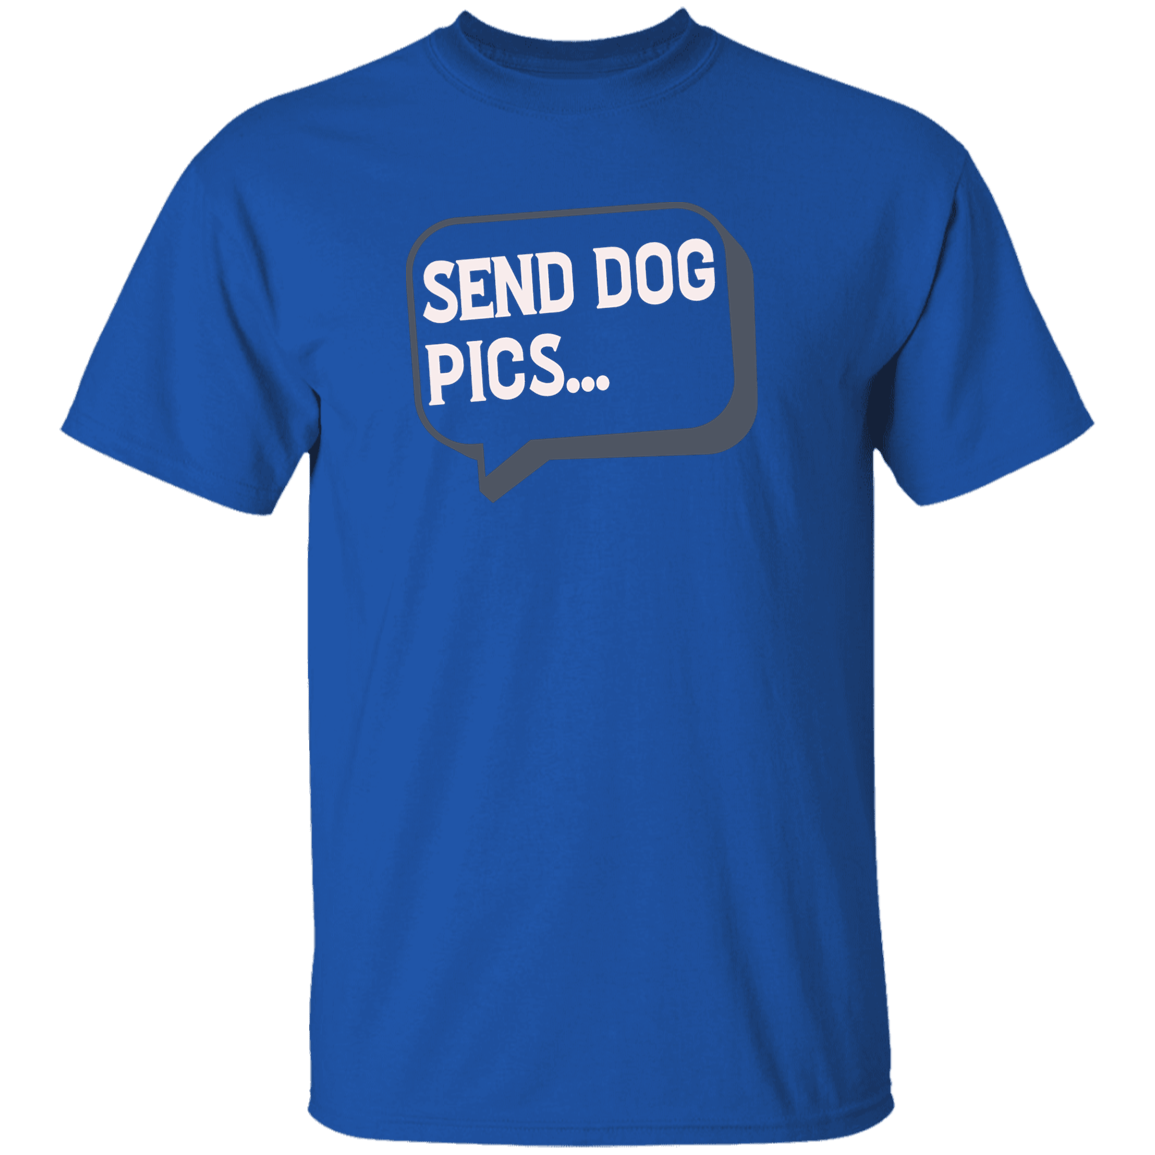 Send Dog Pics - T Shirt.